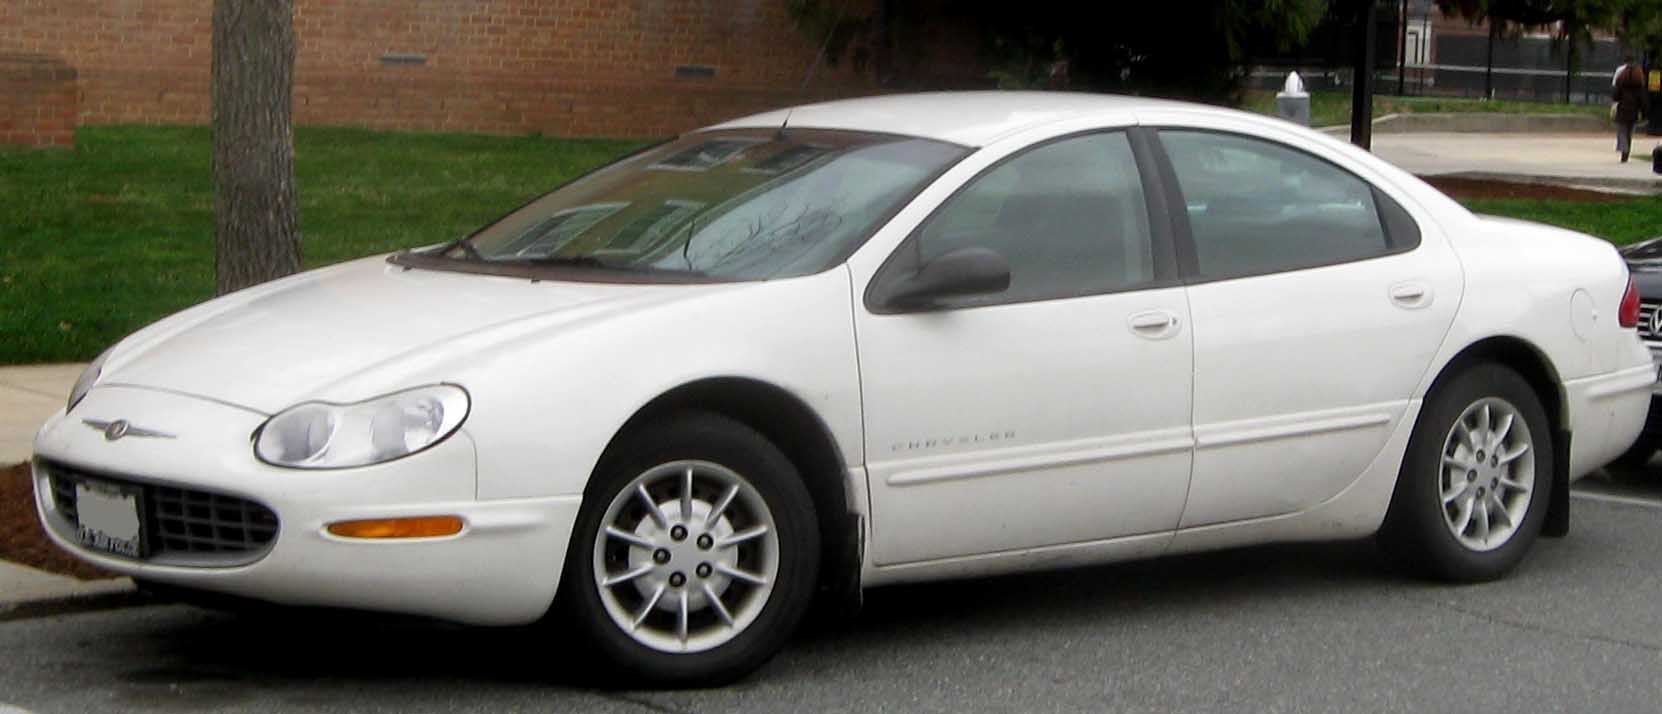 Chrysler concorde 2002 lxi #3